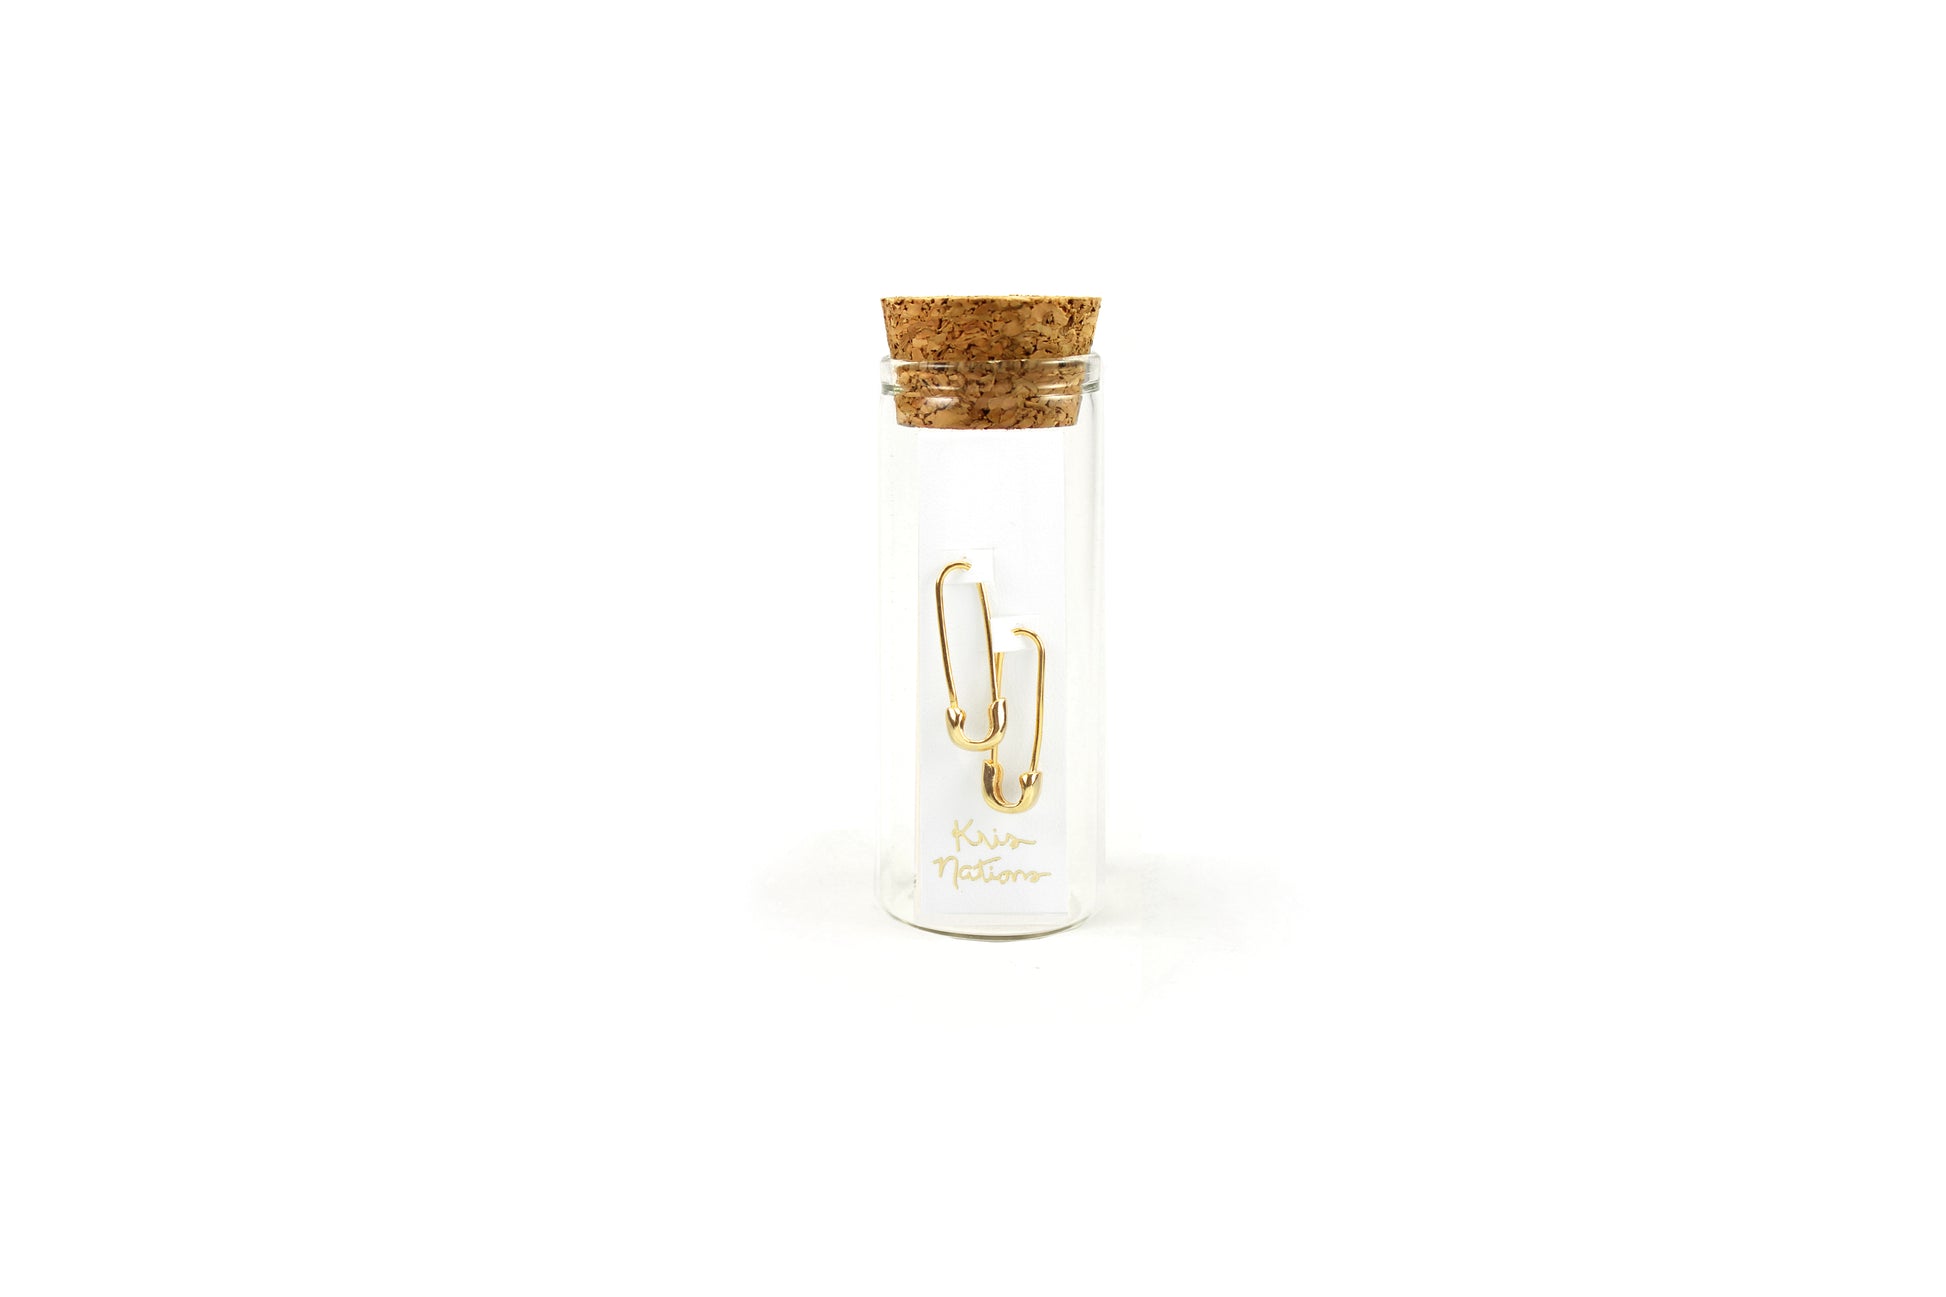 Safety Pin Hoop Earrings - Gold & Sterling Silver | Kris Nations 18K Gold Vermeil